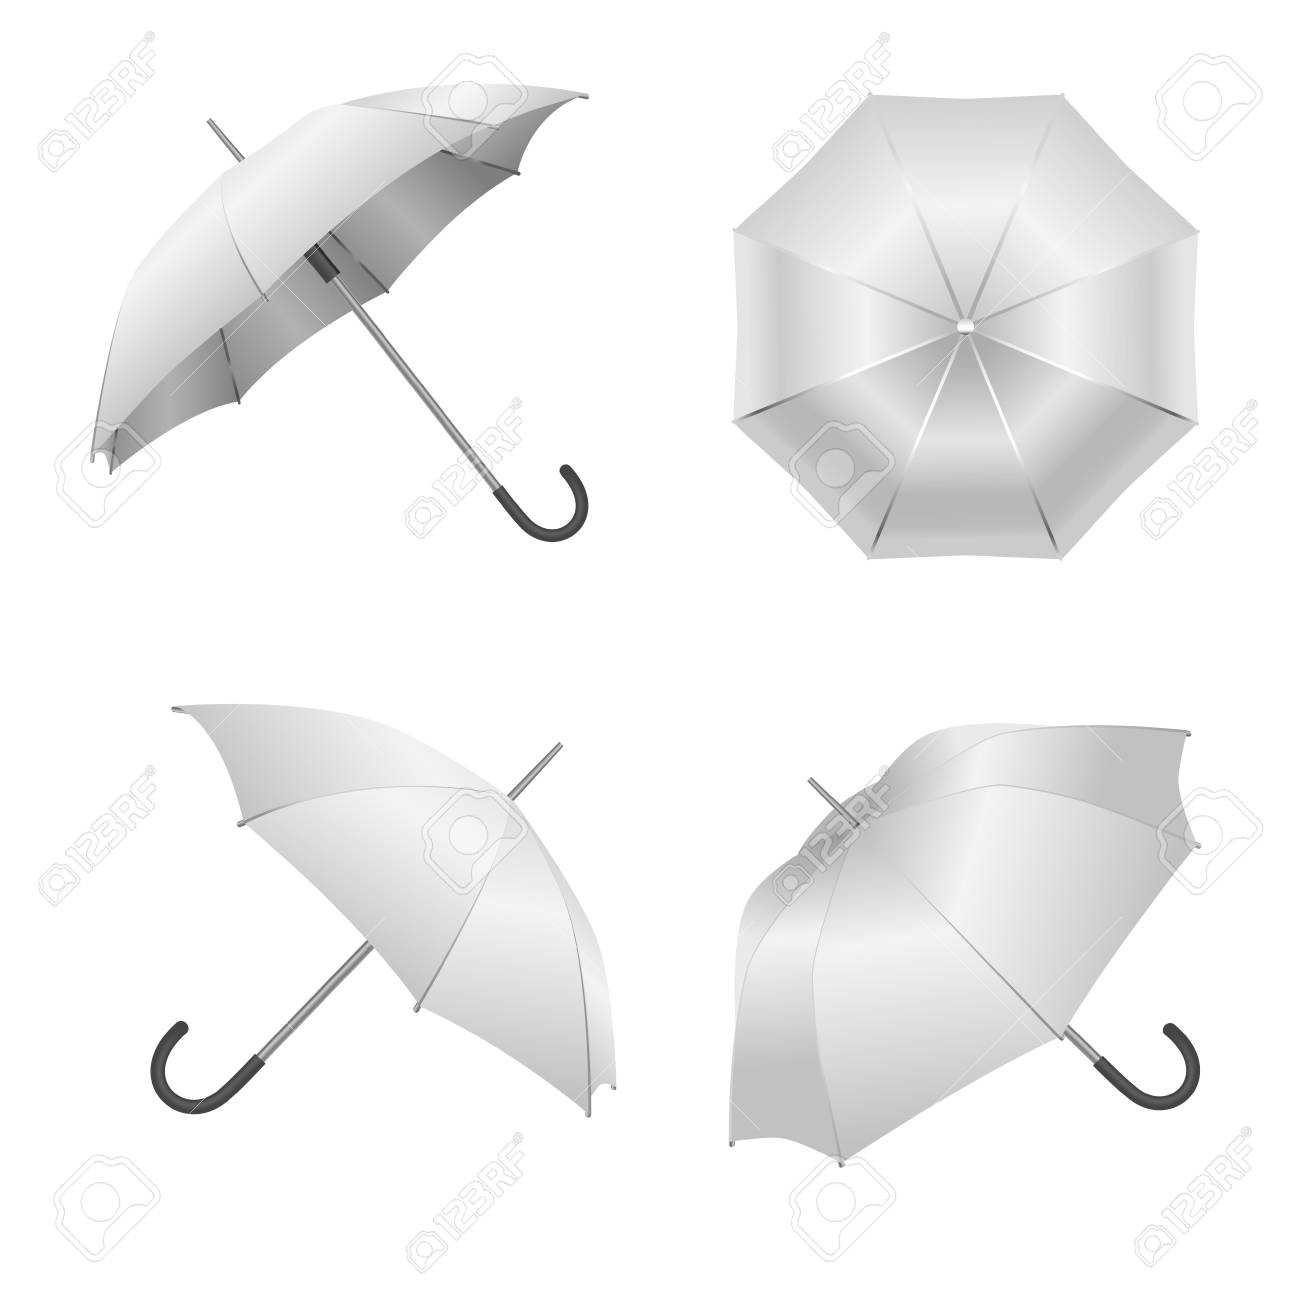 Realistic Detailed 3D White Blank Umbrella Template Mockup Set For Blank Umbrella Template